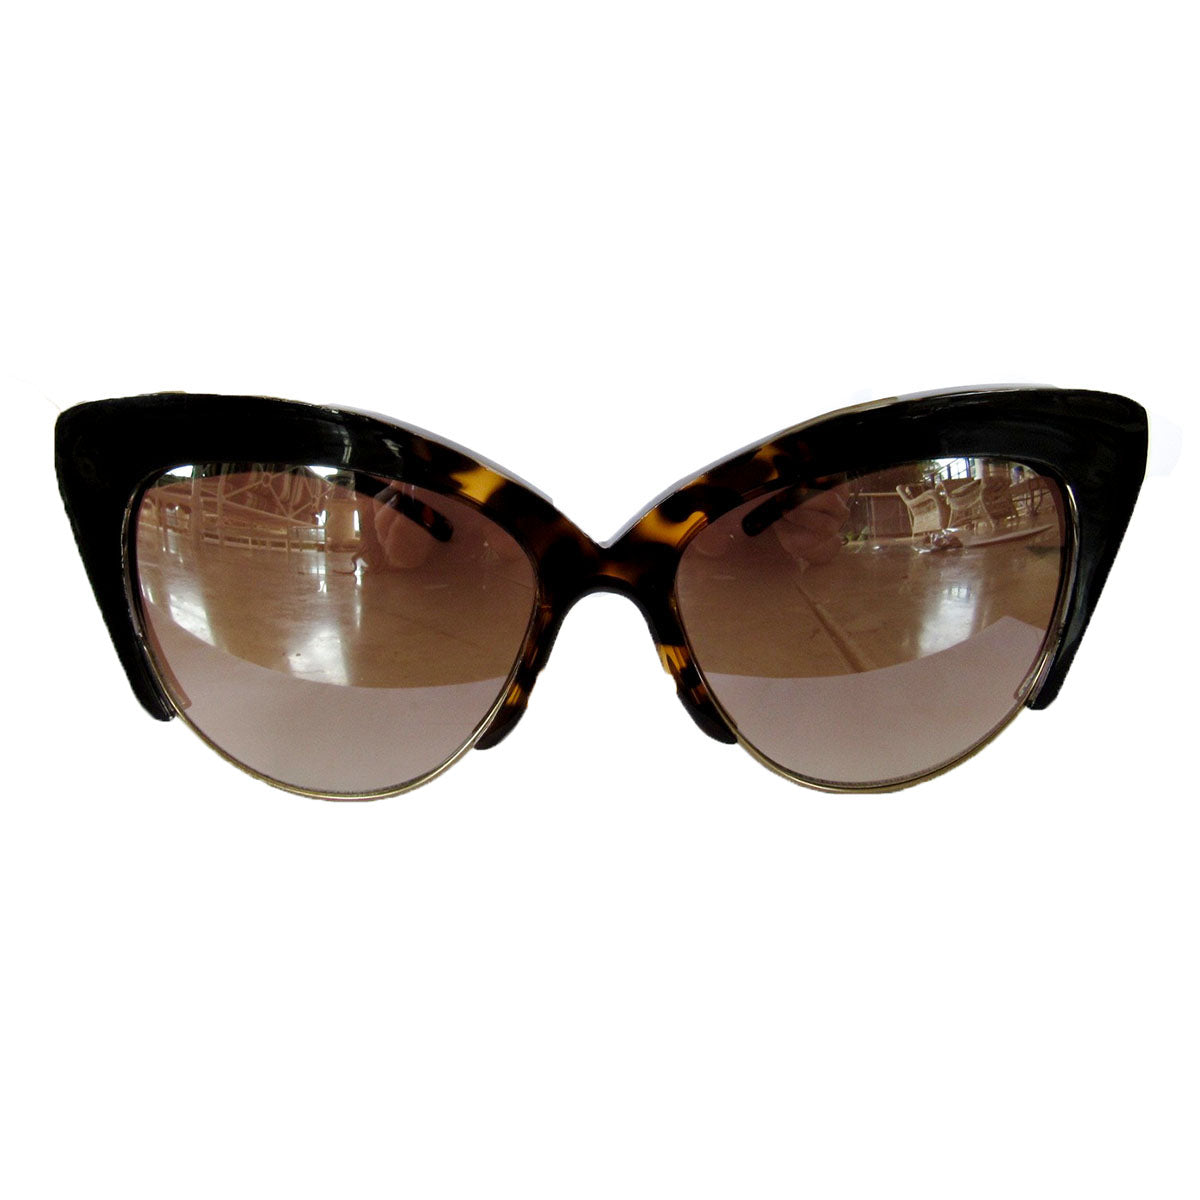 Medium Cat Eye Turtle Print and Black Coloured Sunglasses w/ Silver Mirrored Lenses